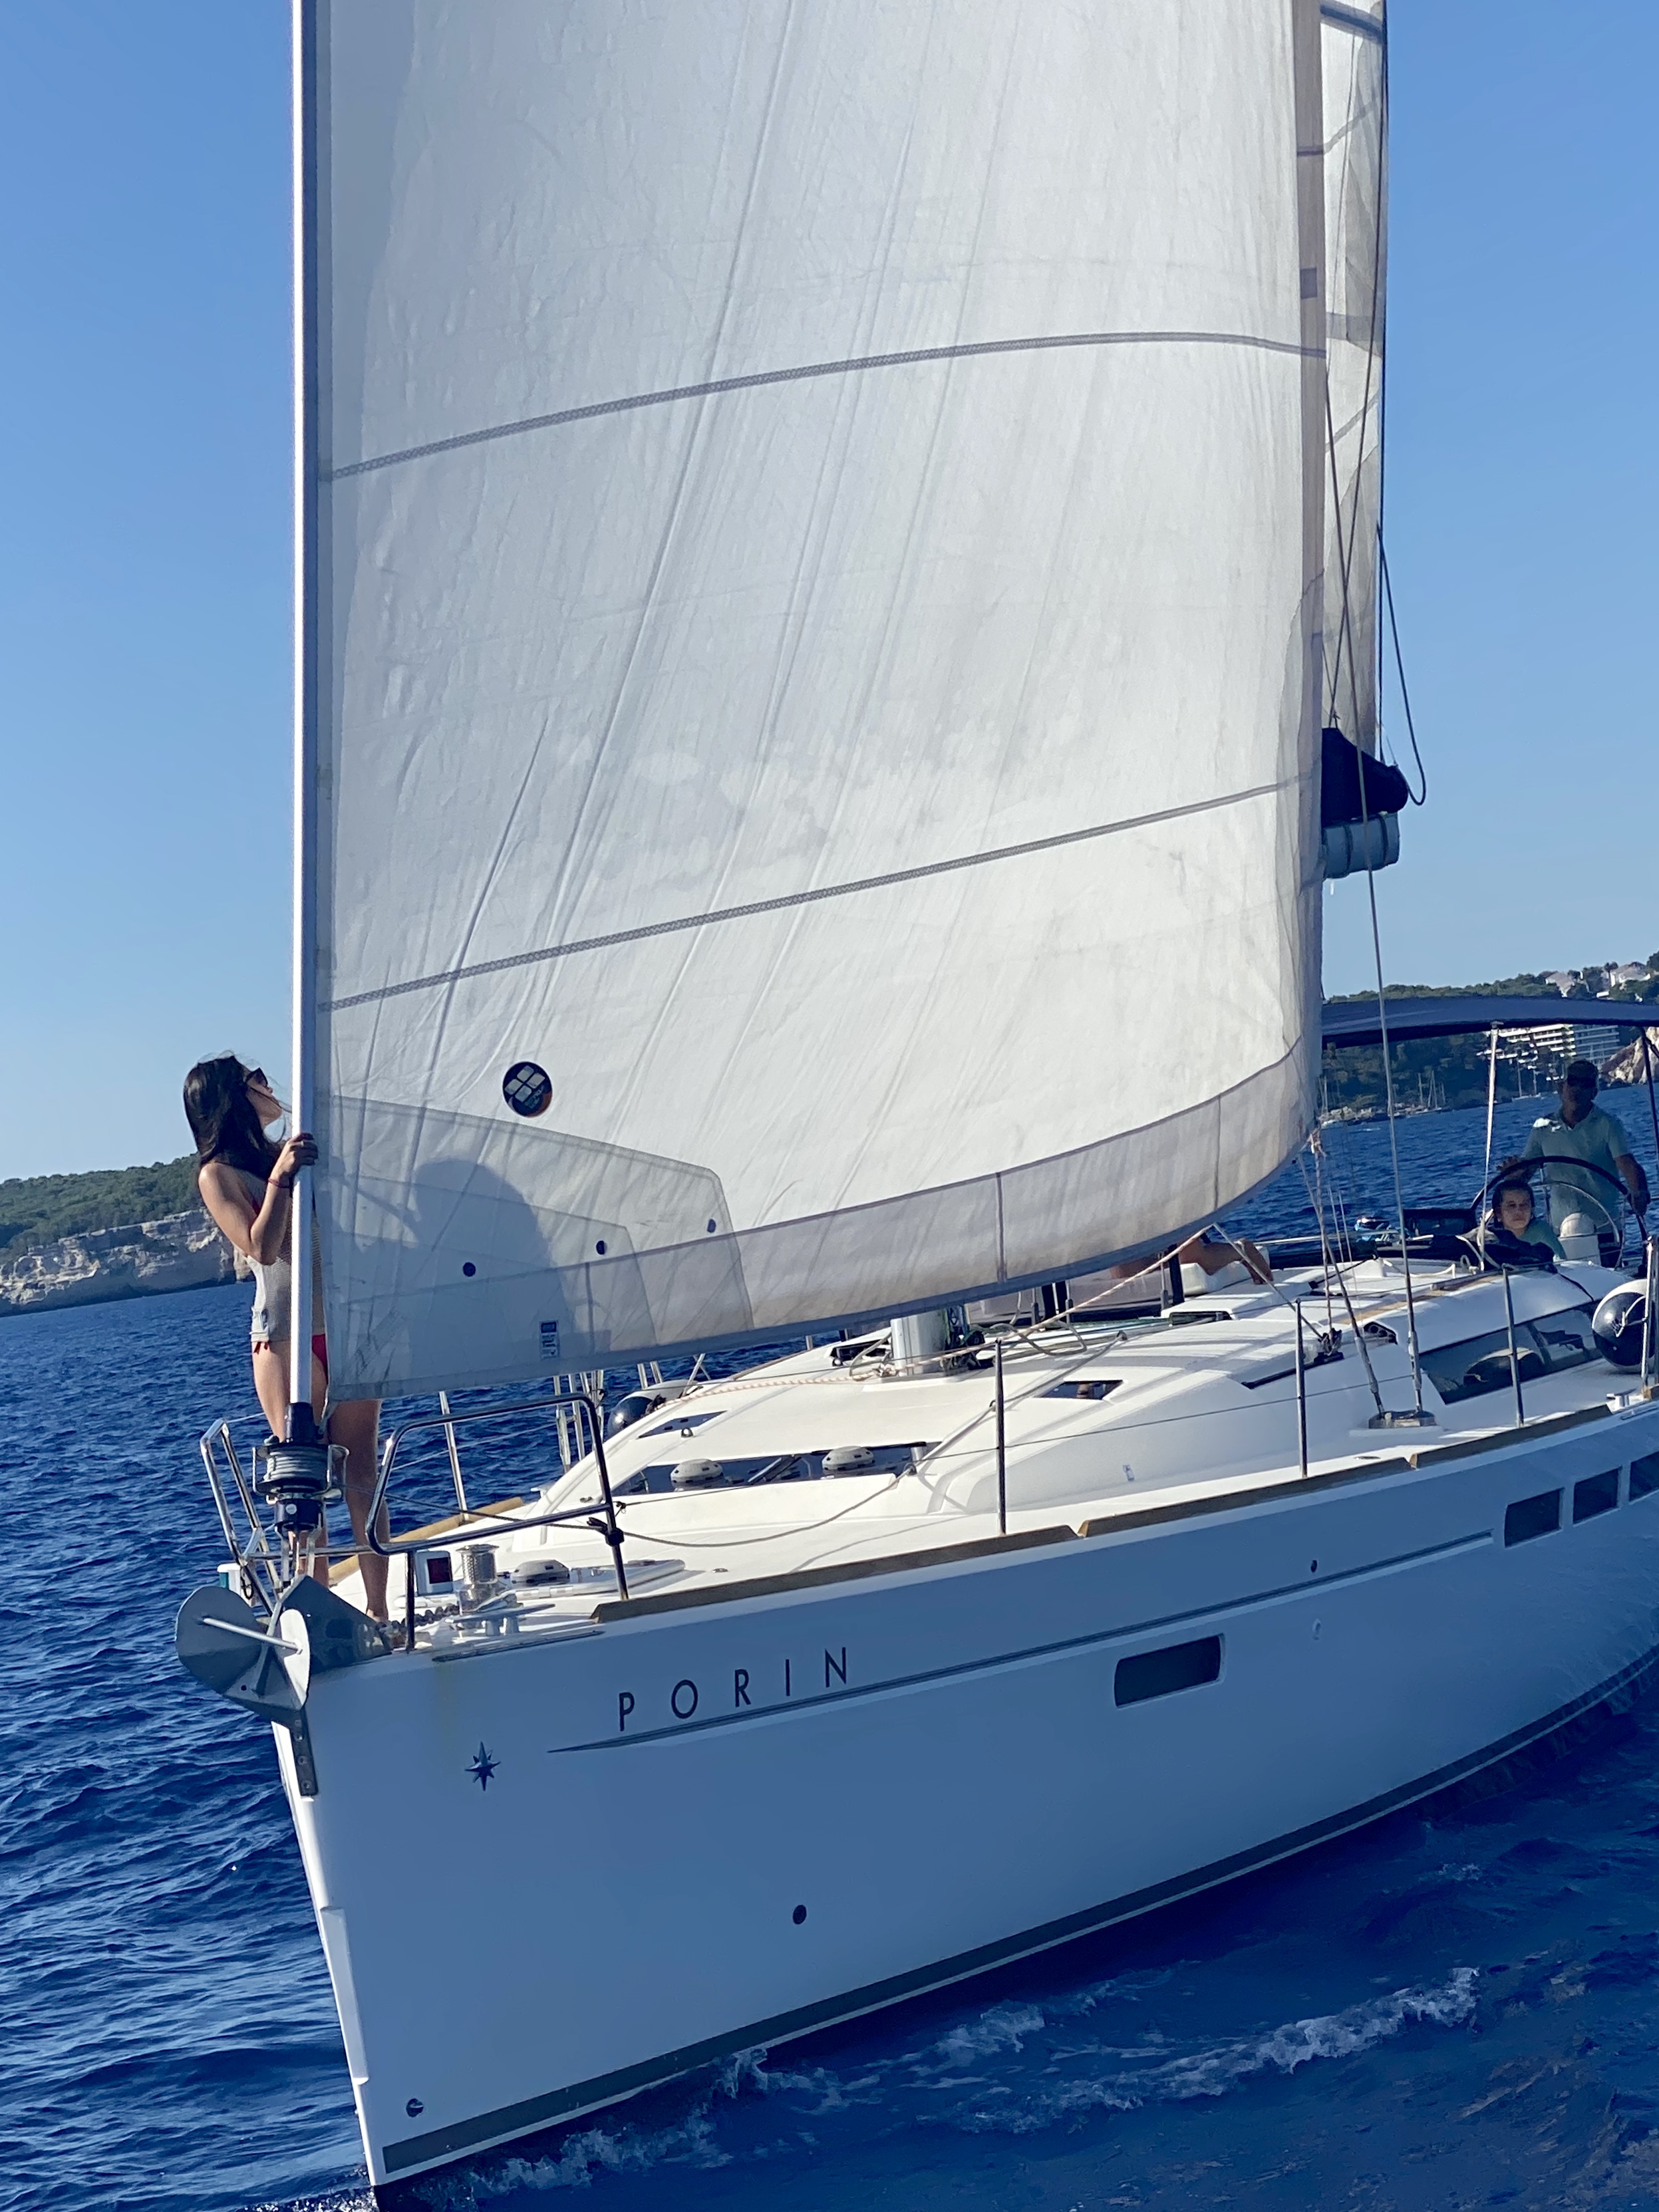 Alquiler-Barcos-Mallorca-veleros-vacaciones-Baleares-mediterraneo-flotilla-familiar